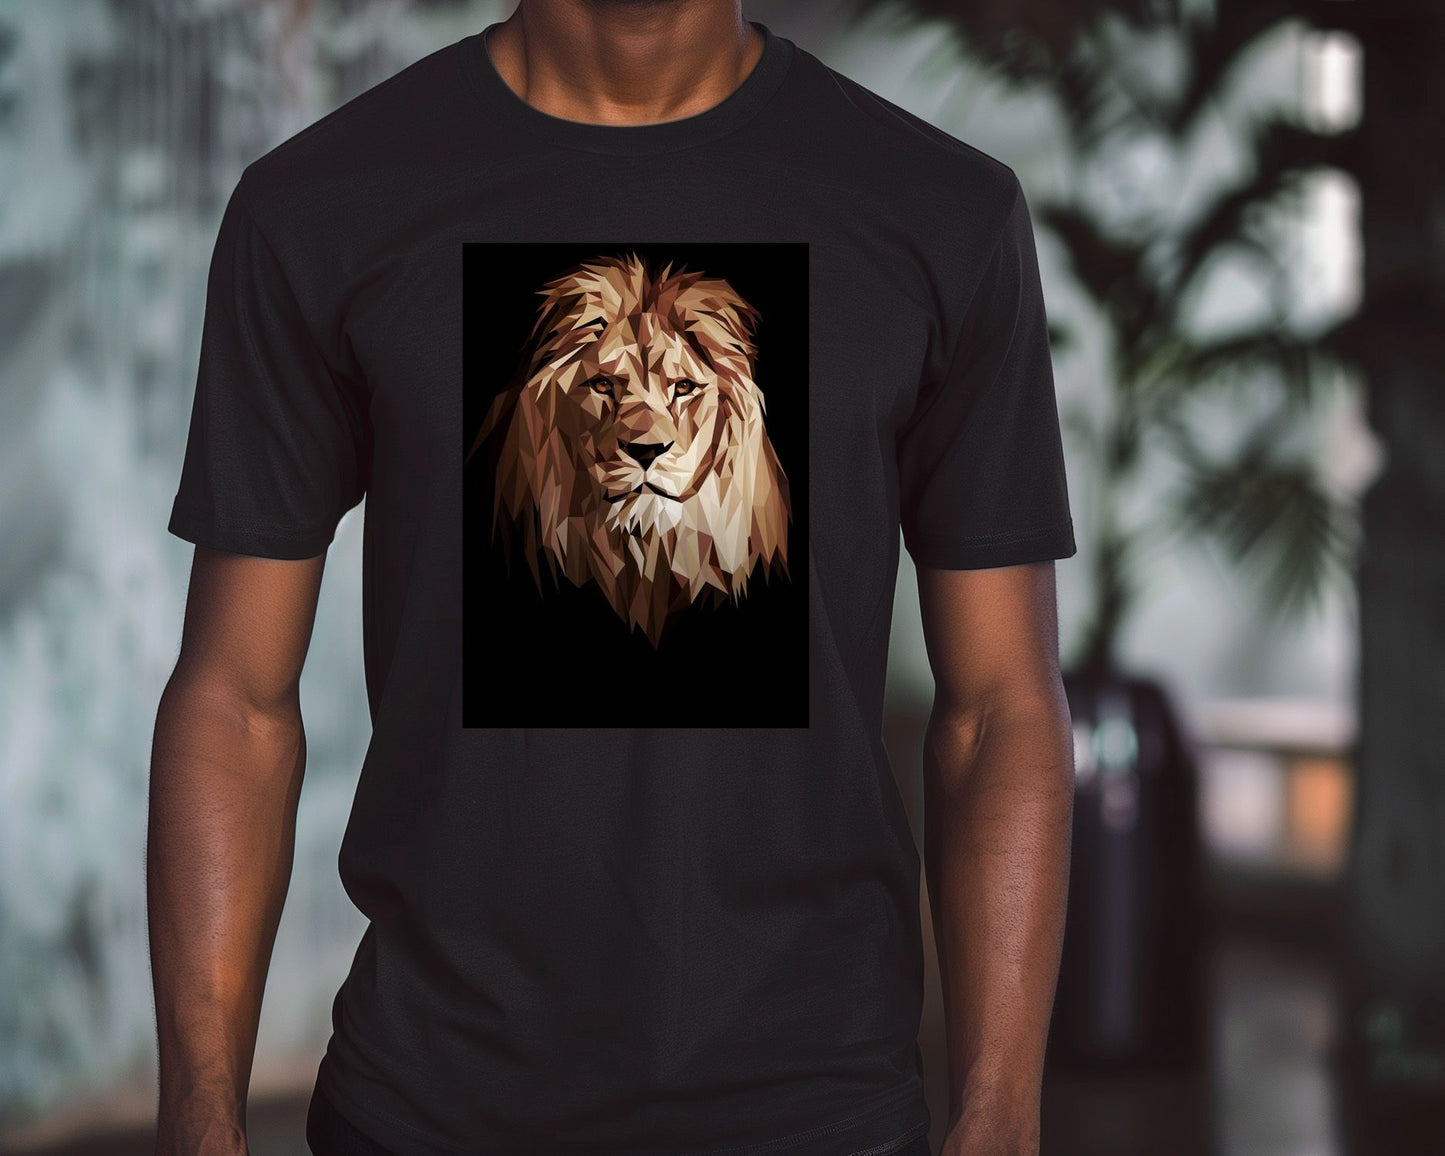 lion king - @Artnesia